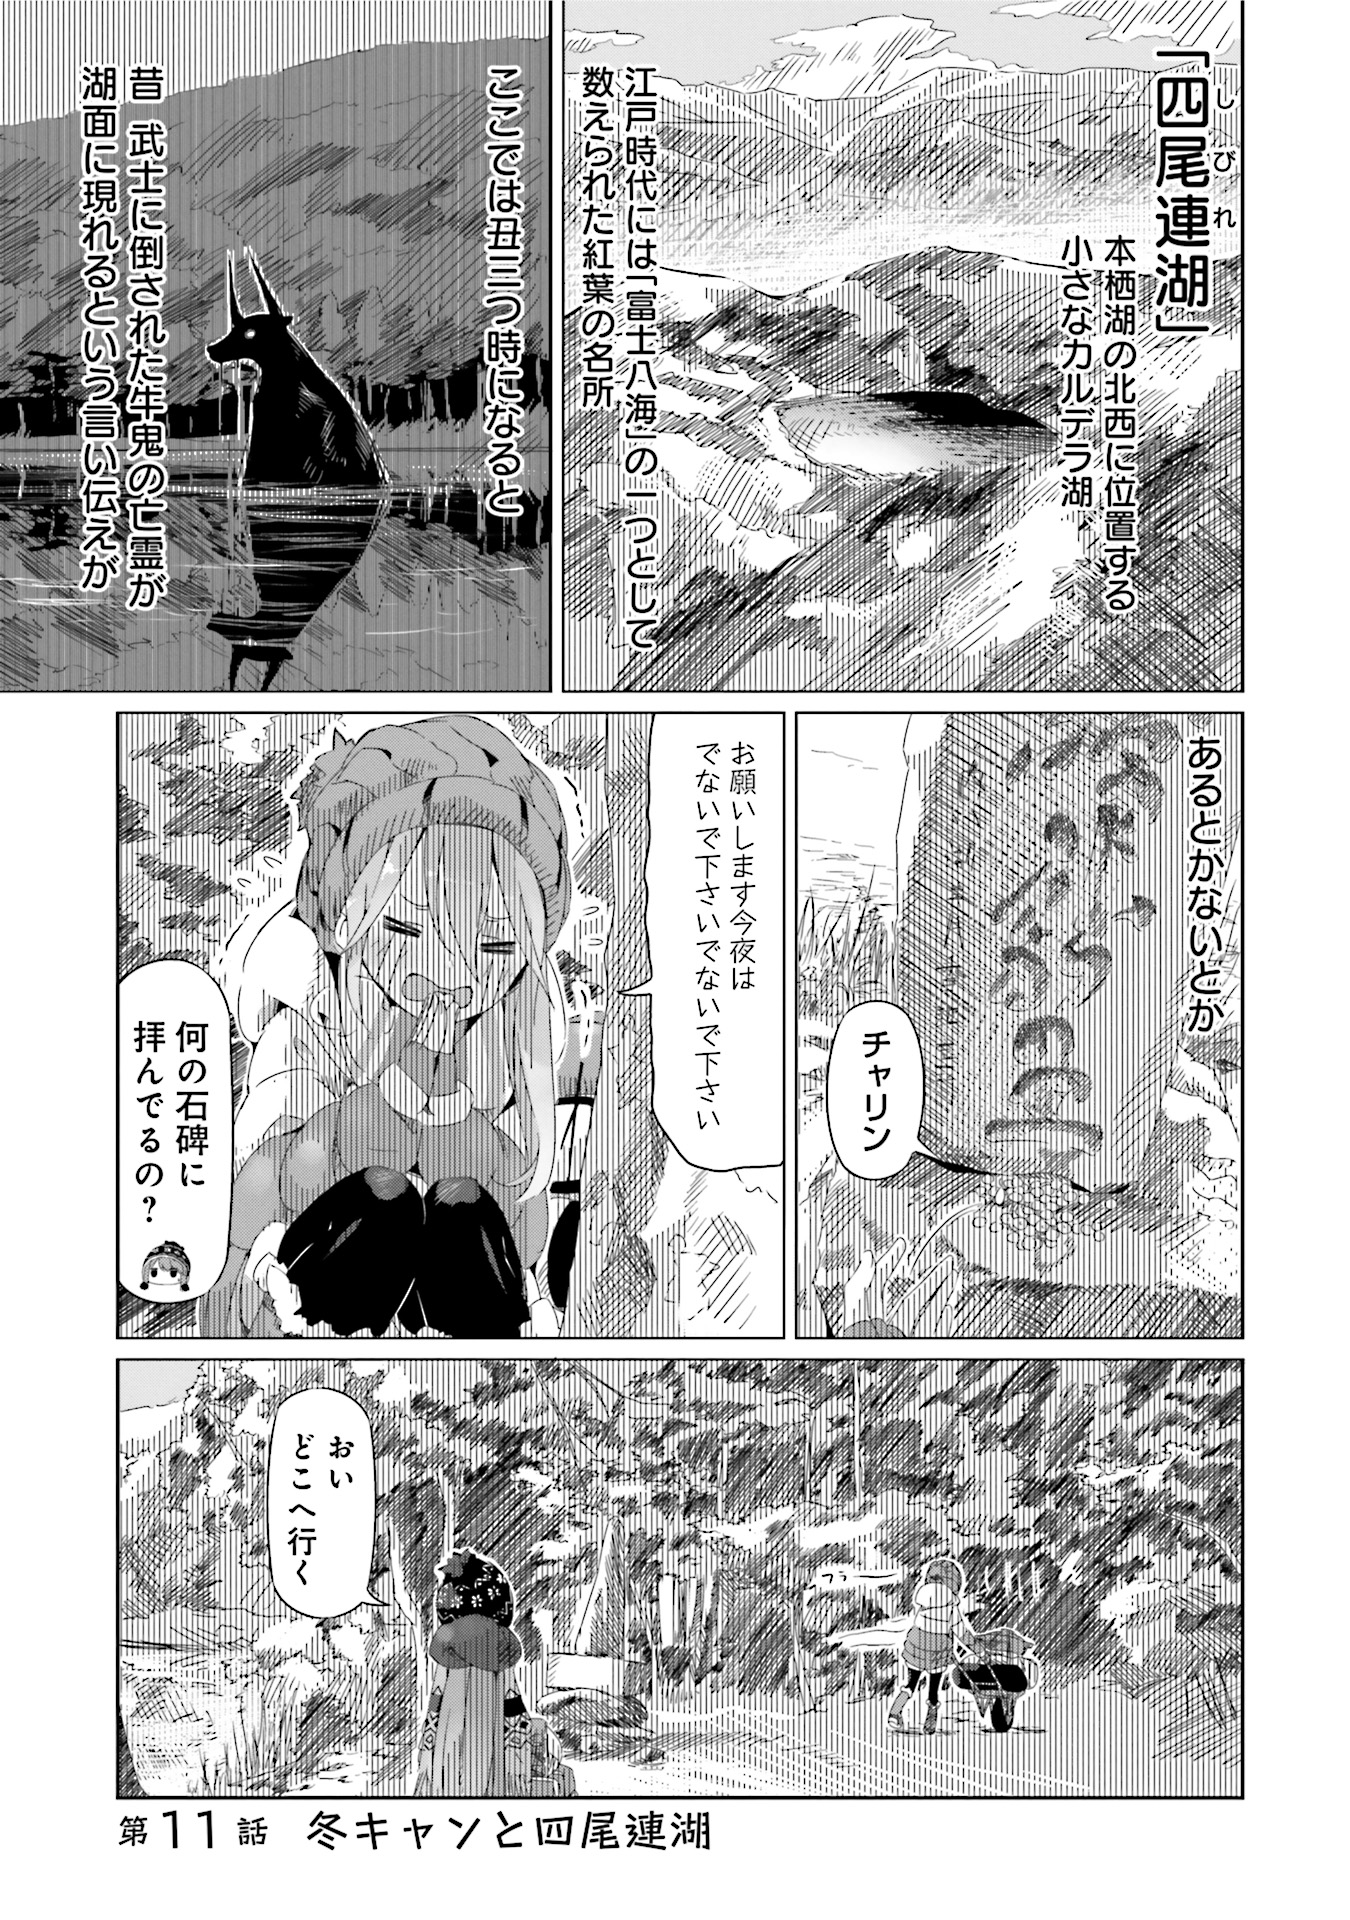 Yuru Camp - Chapter 11 - Page 2